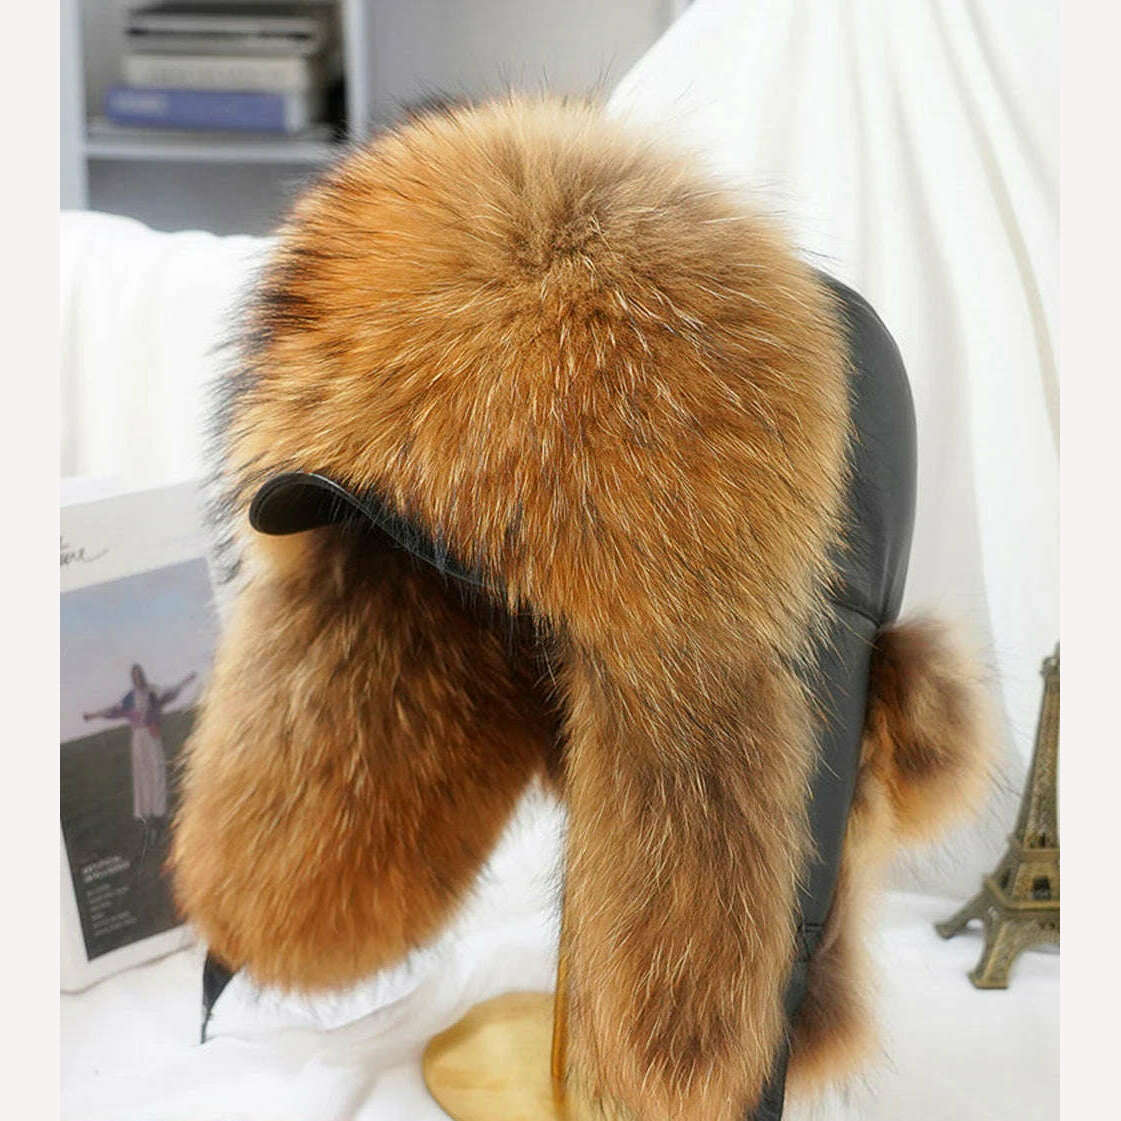 KIMLUD, Winter Men's 100% Real Sliver Fox Fur Bomber Hat Raccoon Fur Ushanka Cap Trapper Russian Man Ski Hats Caps Mens Raccoon Fur Hat, KIMLUD Women's Clothes